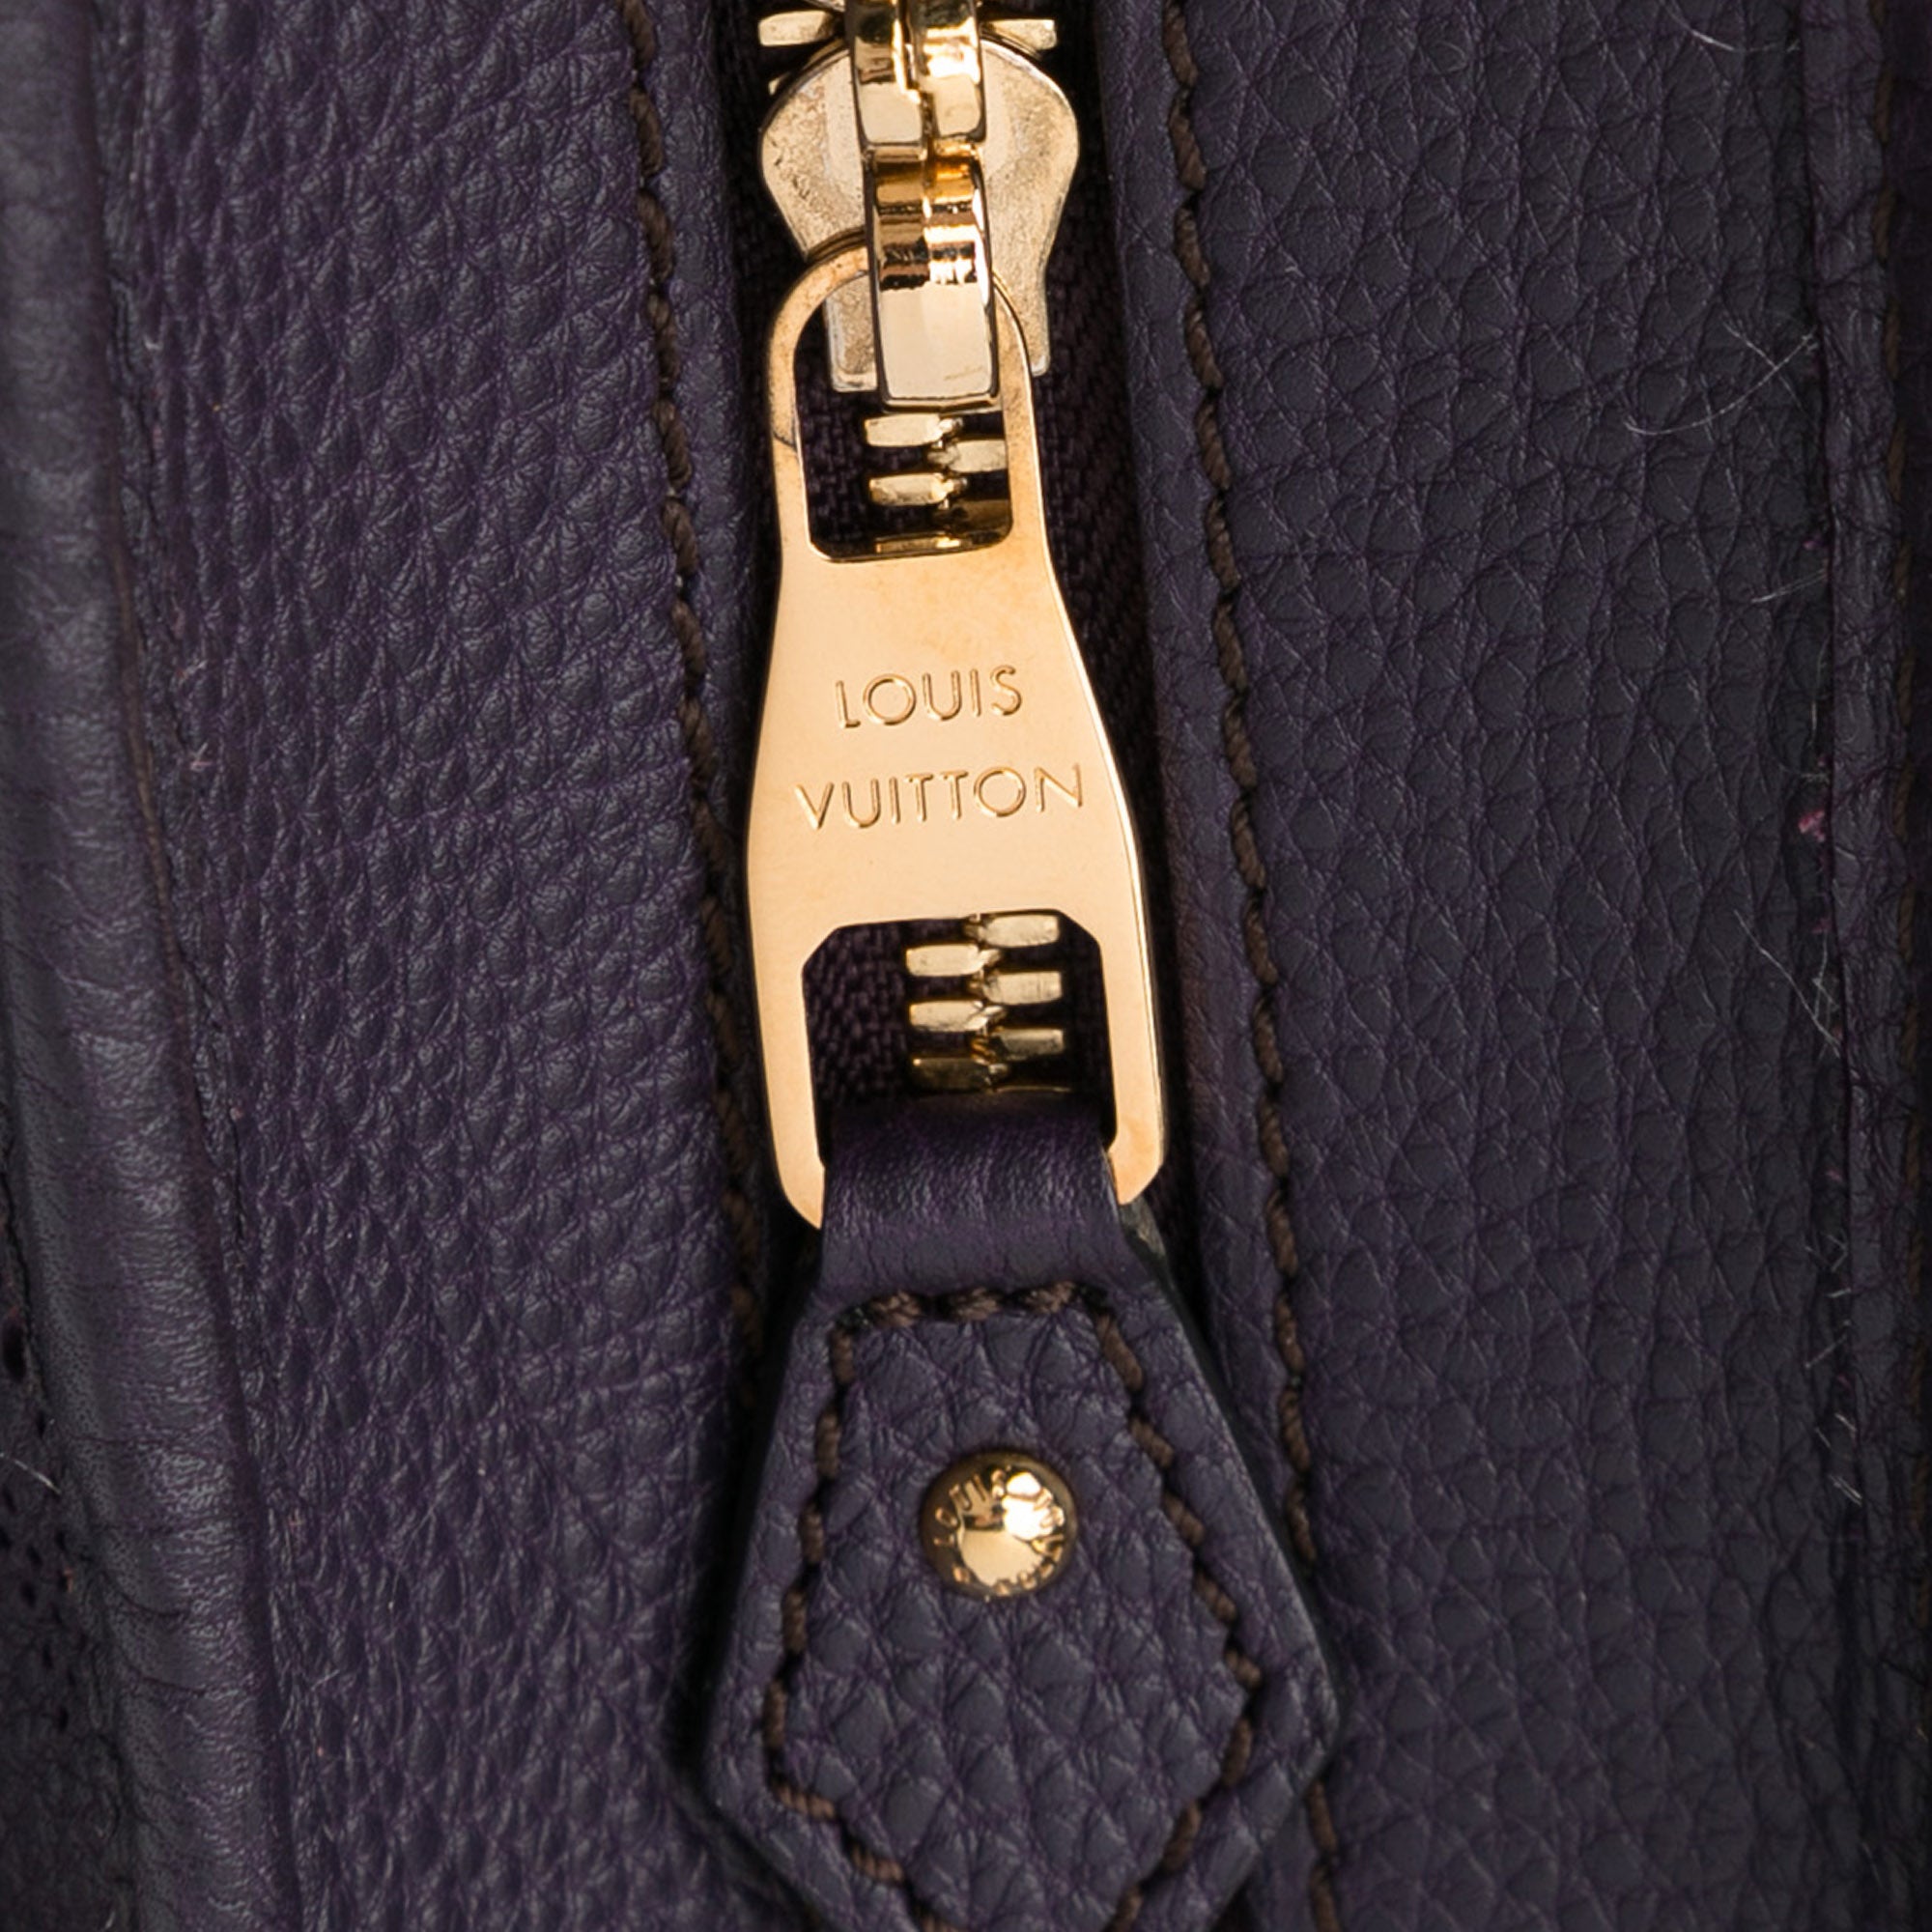 Louis Vuitton Taupe Mahina Leather Stellar PM Bag Louis Vuitton